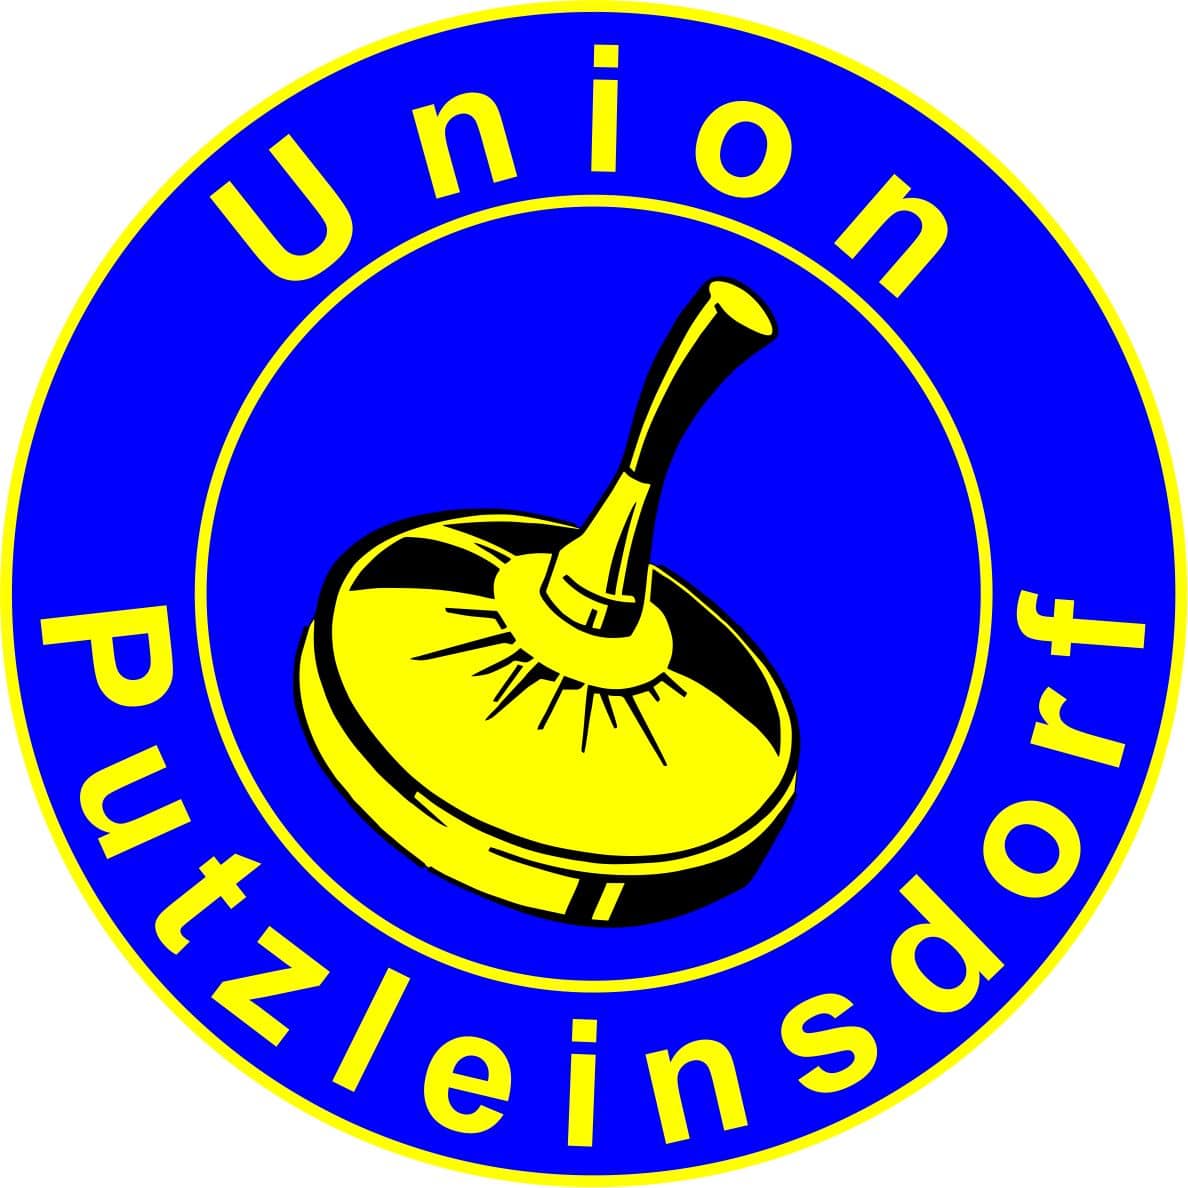 Union Stocksport Putzleinsdorf 2